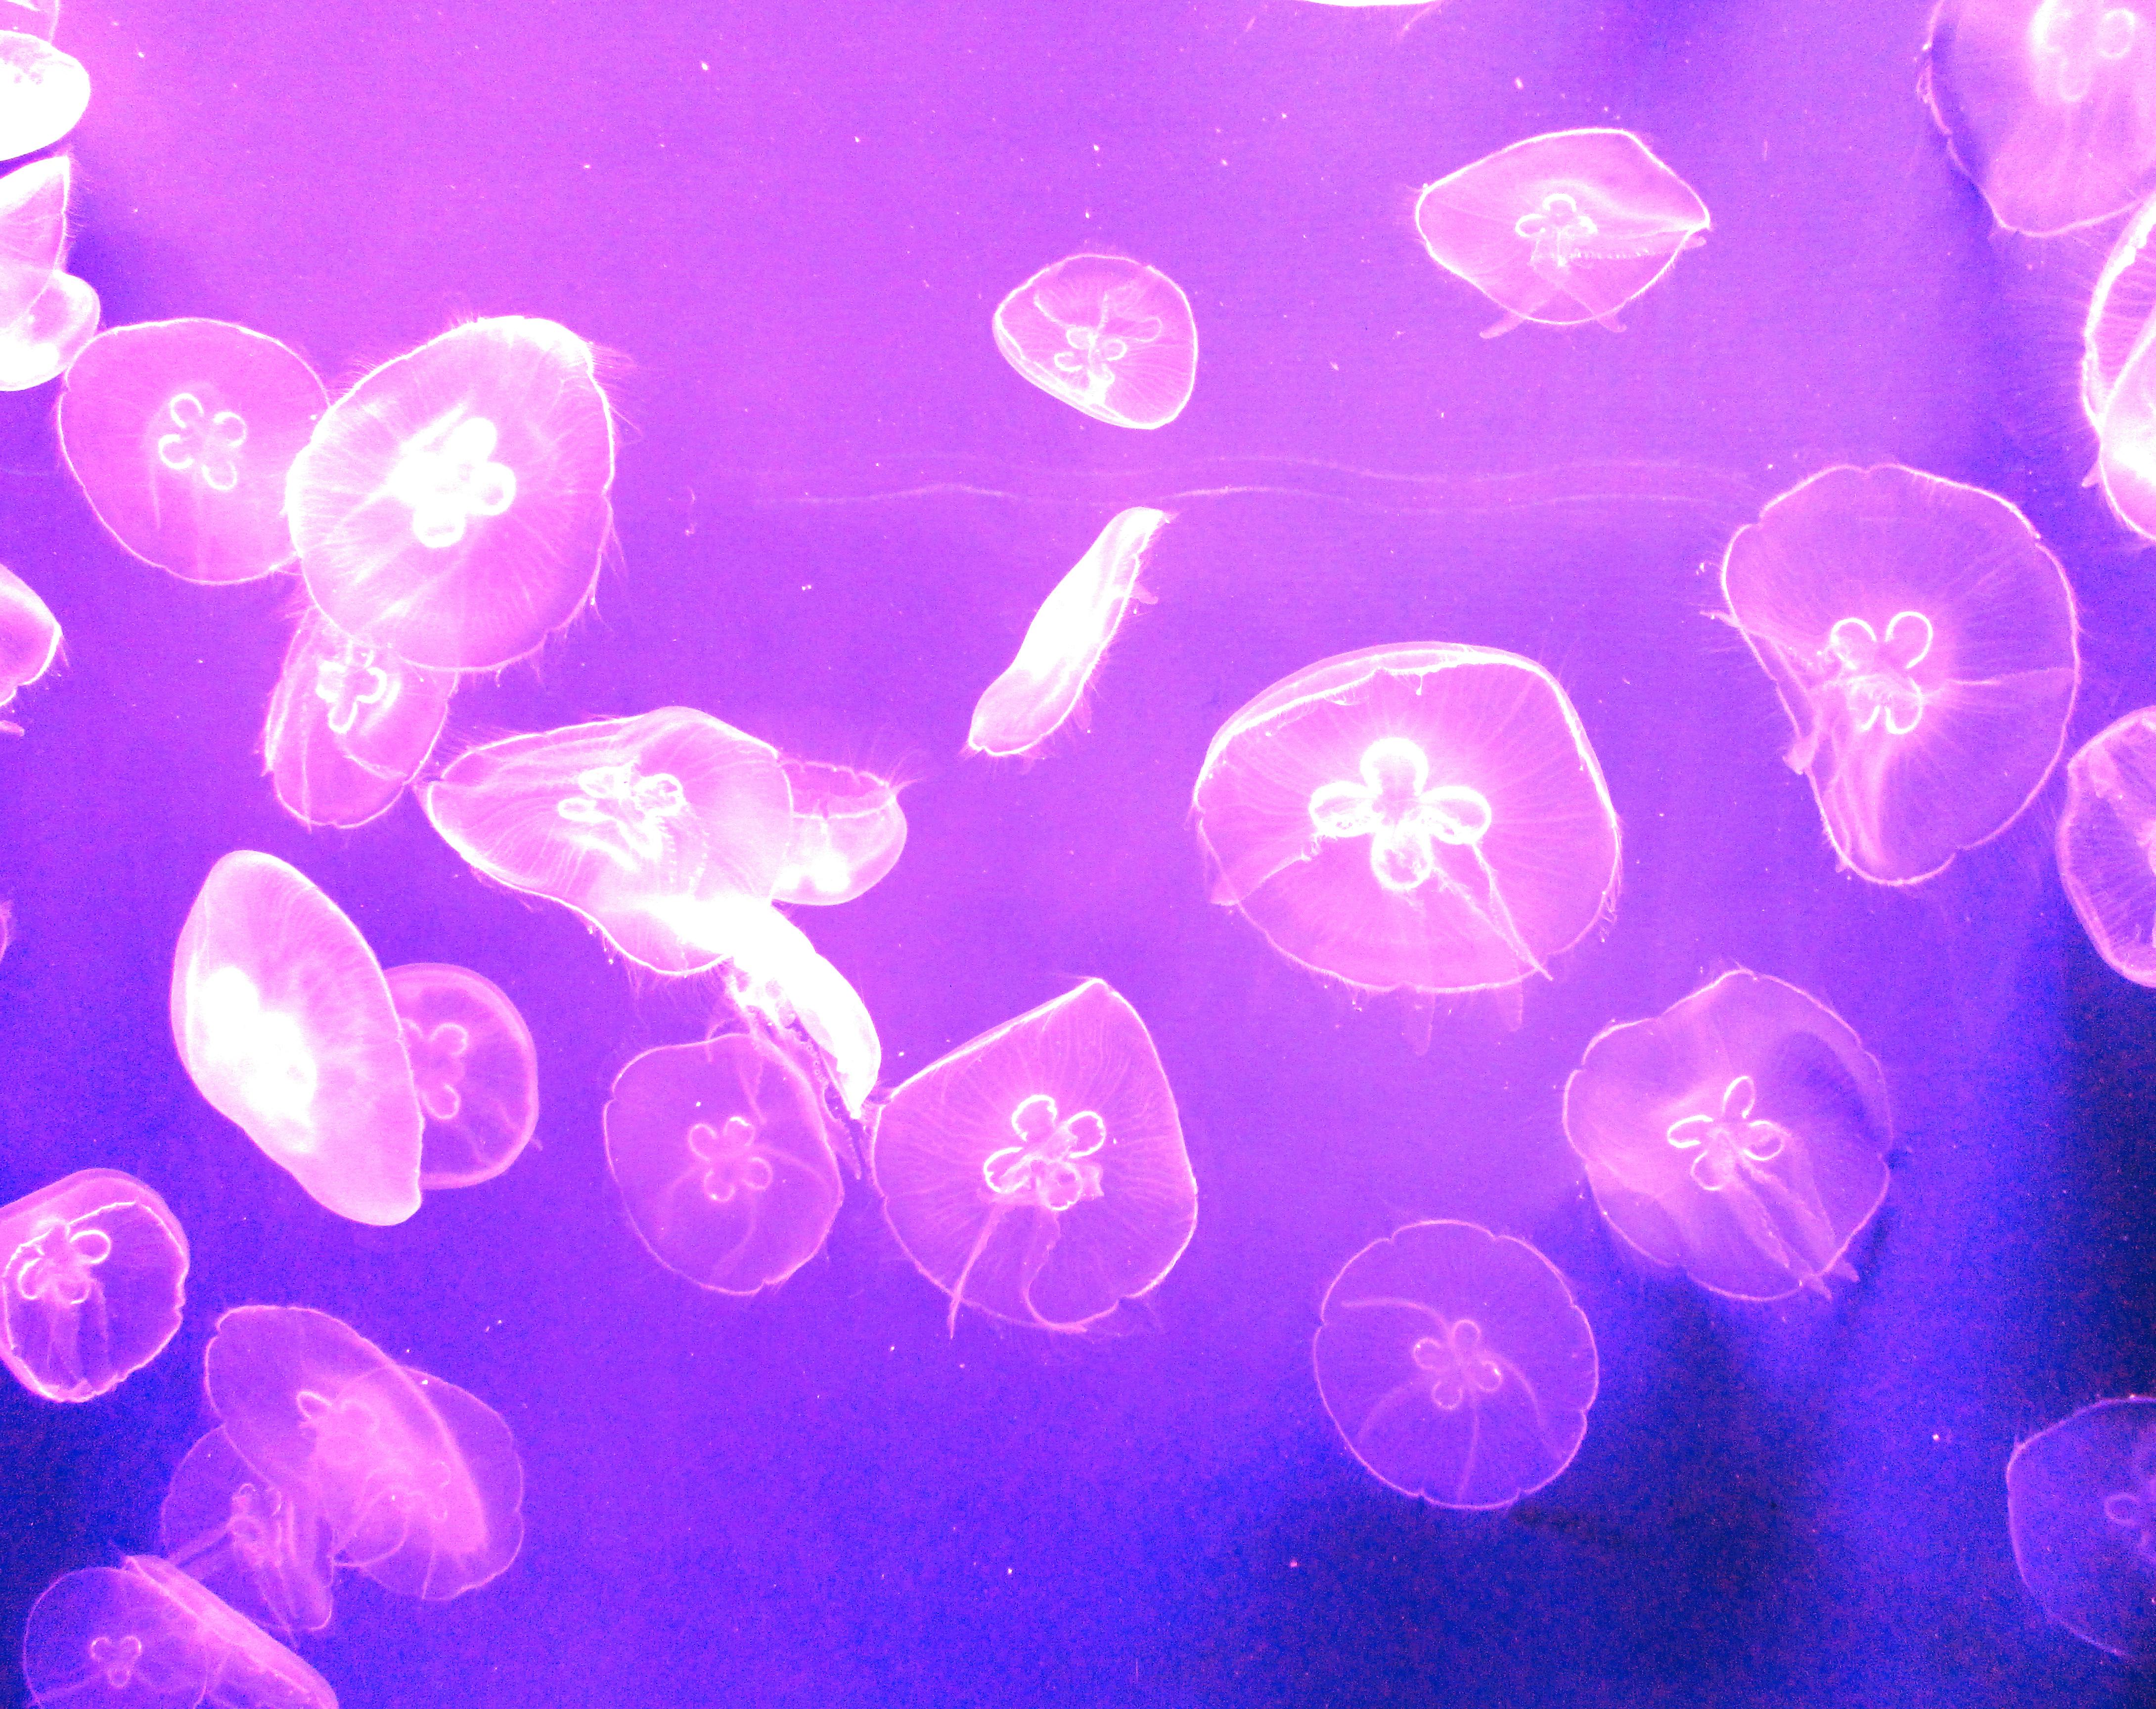 Free stock photo of jellyfish, sea life, steve connerton photography